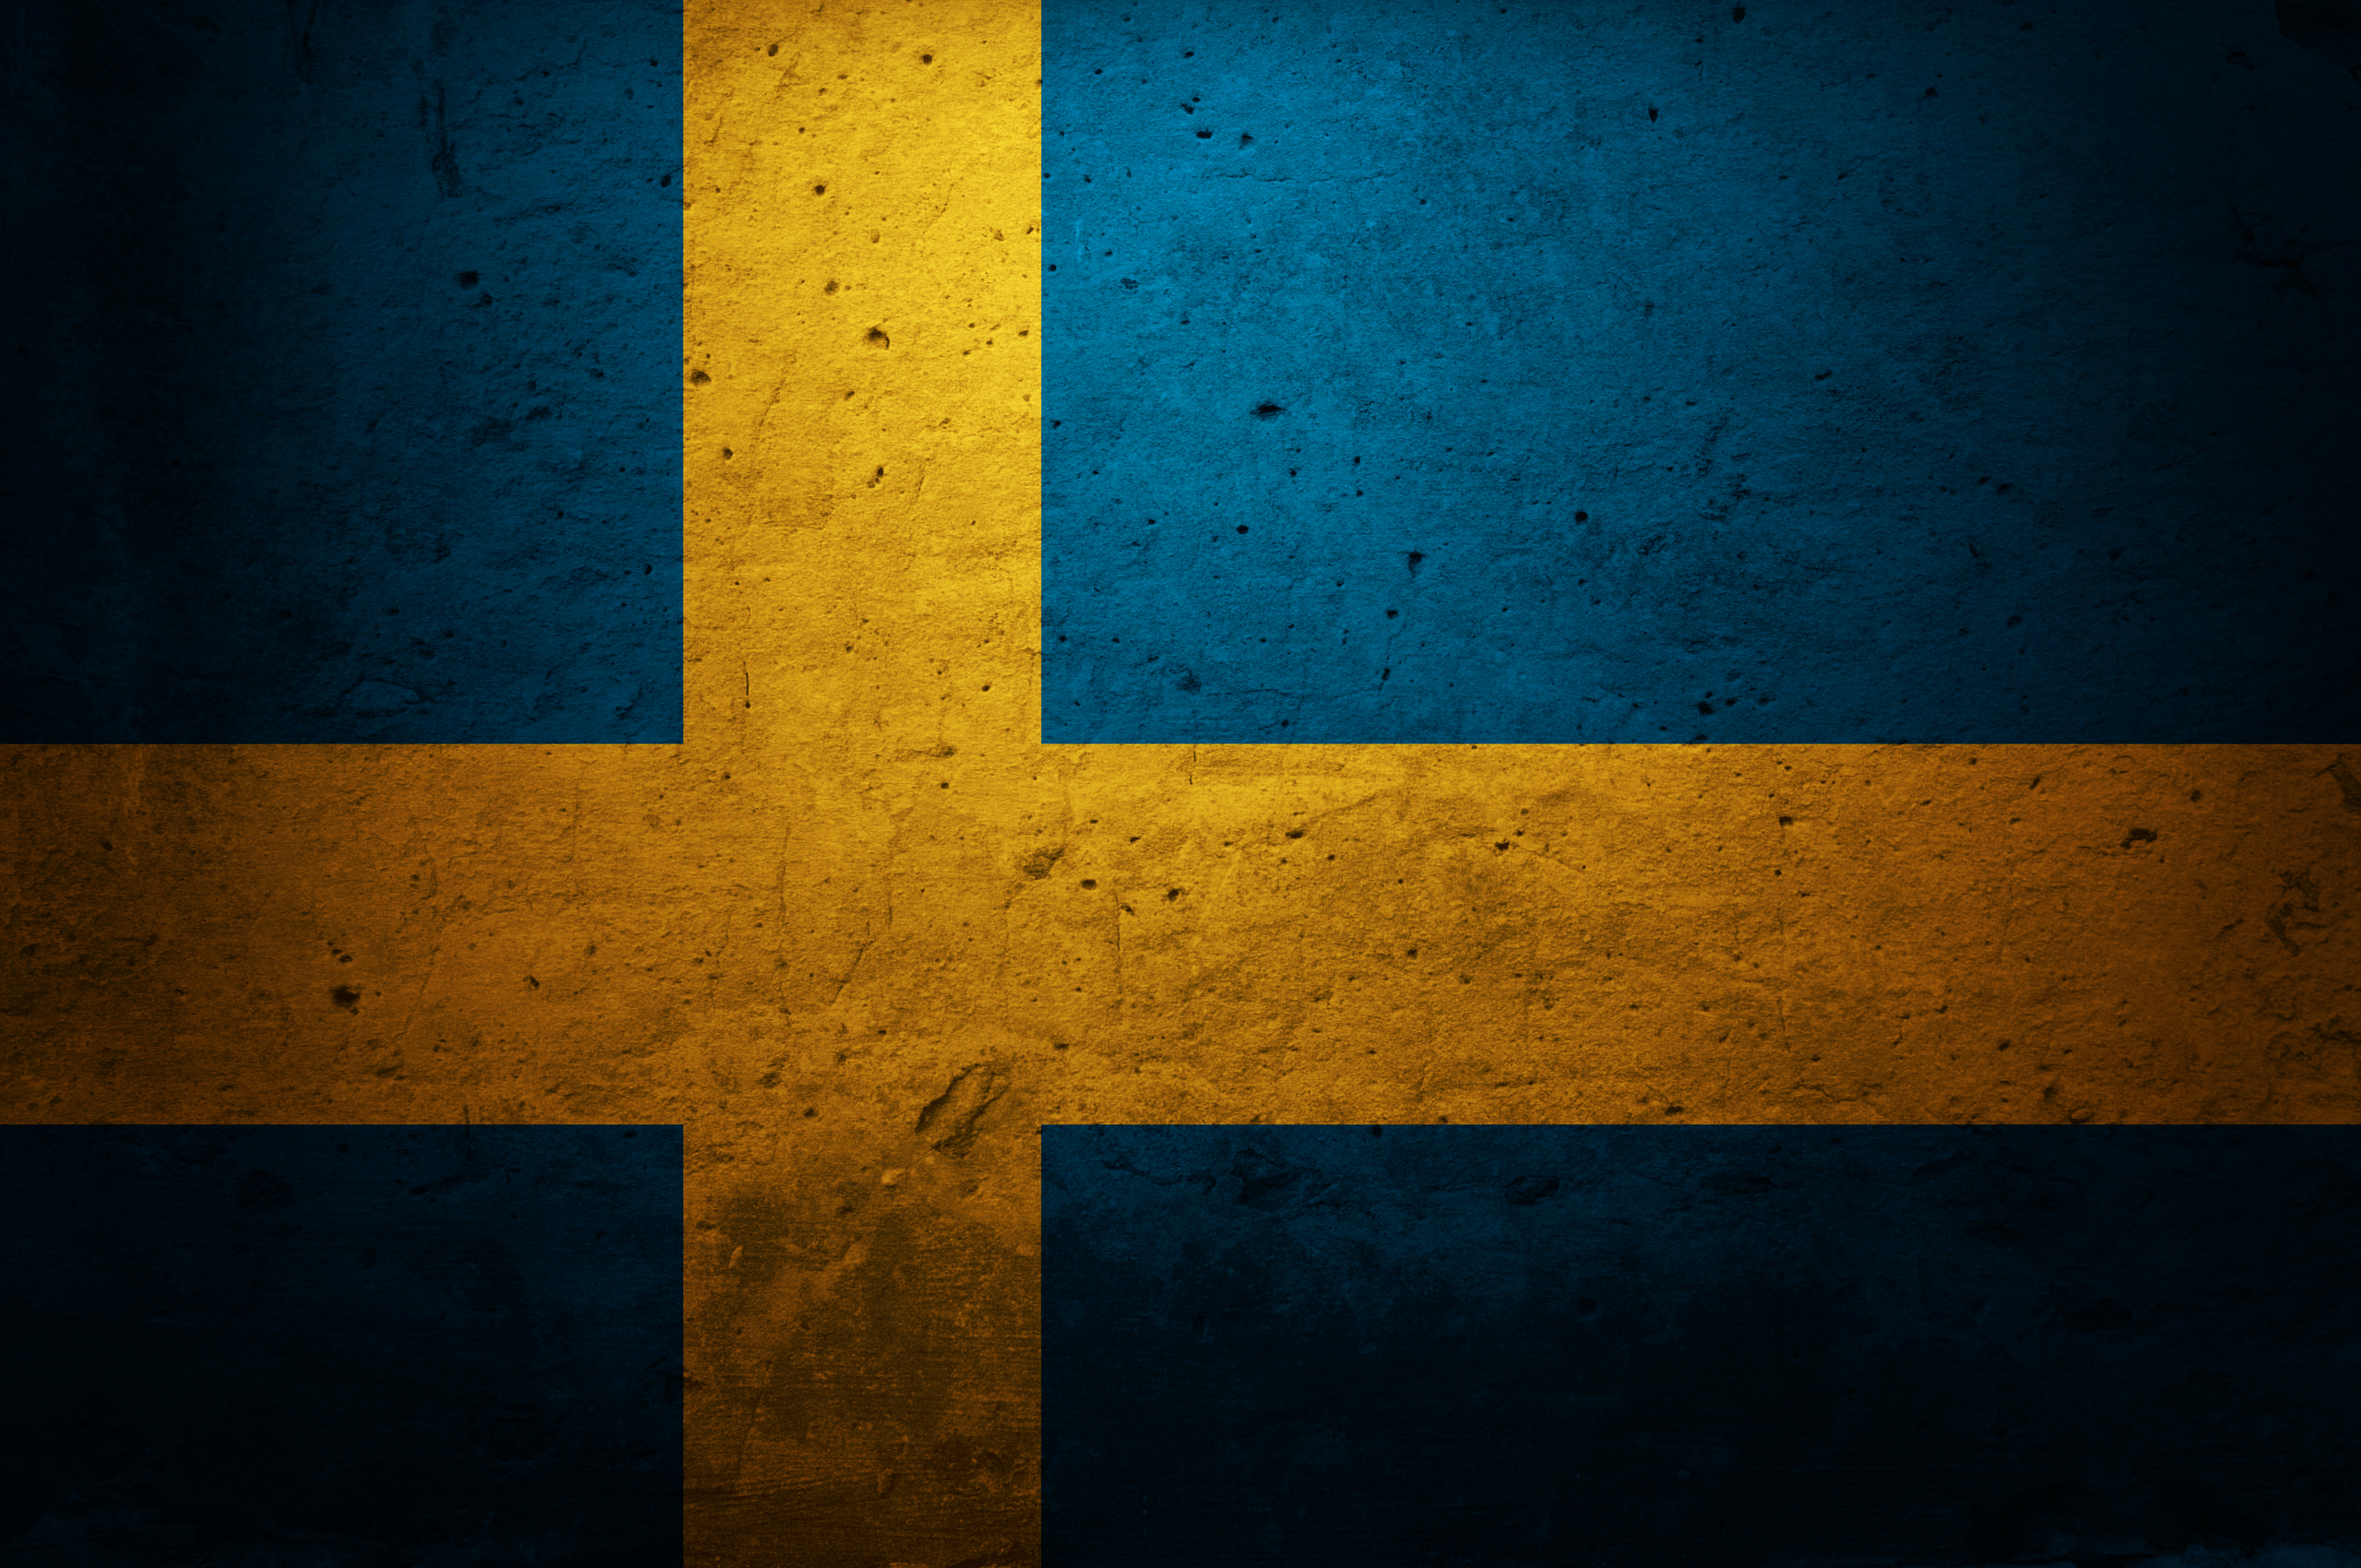 Флаг Швеции 1914